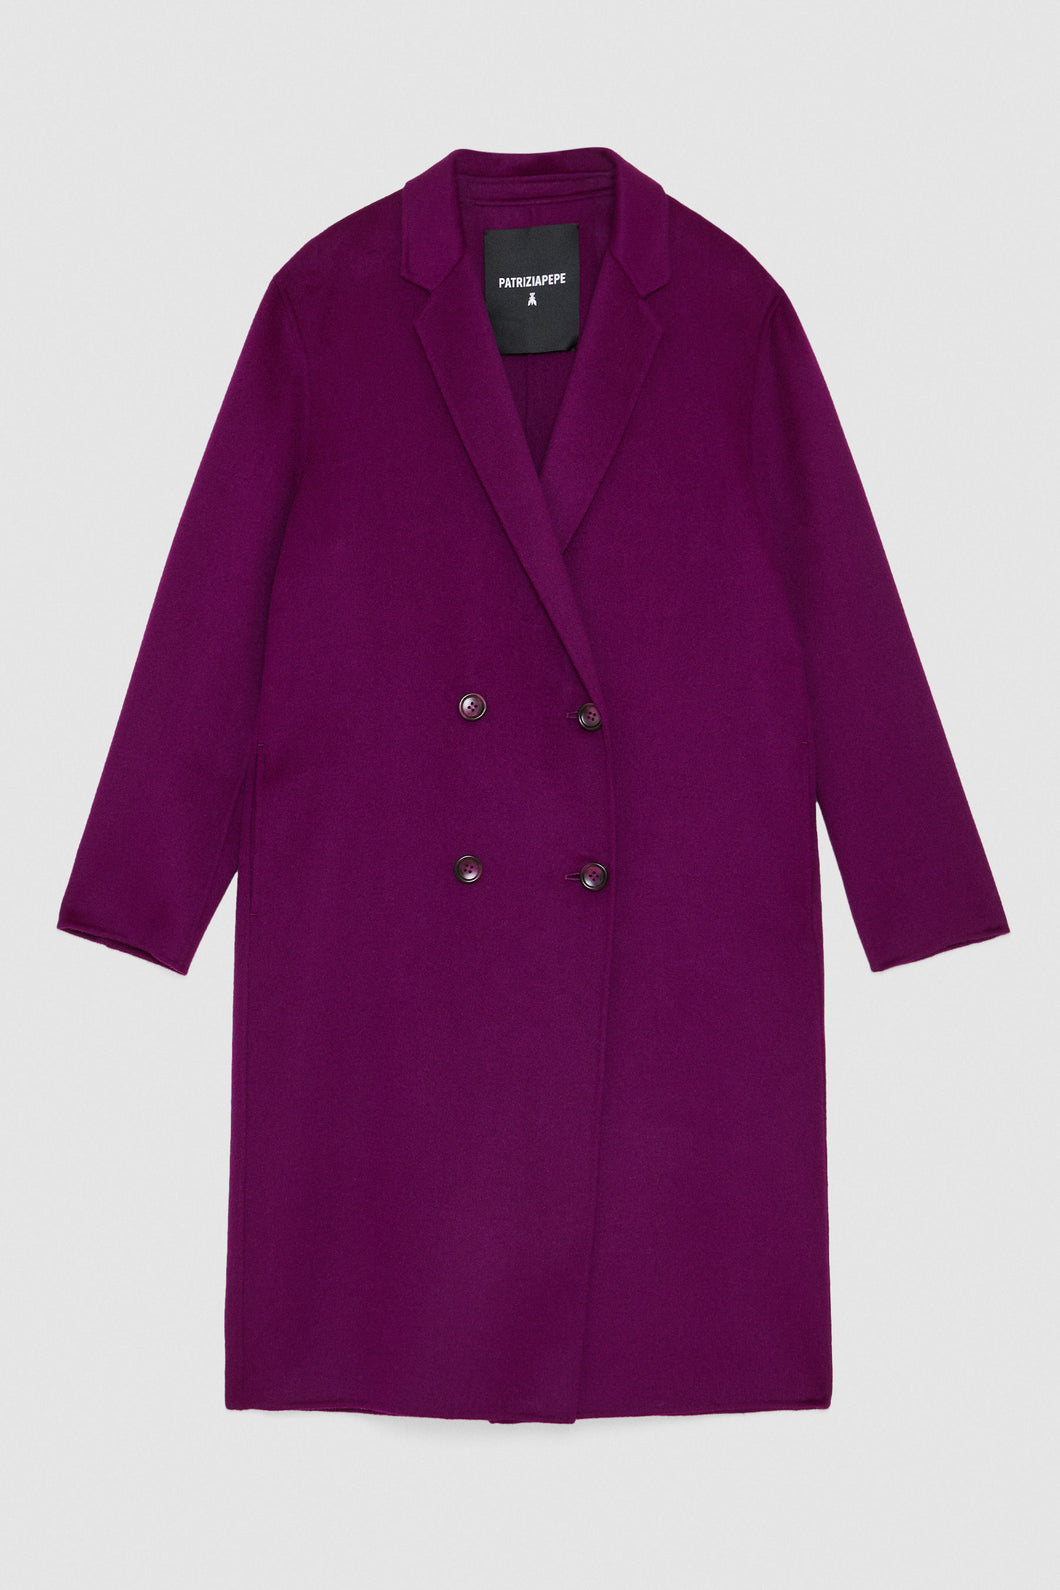 Patrizia Pepe Double Cloth Futuristic Purple Coat